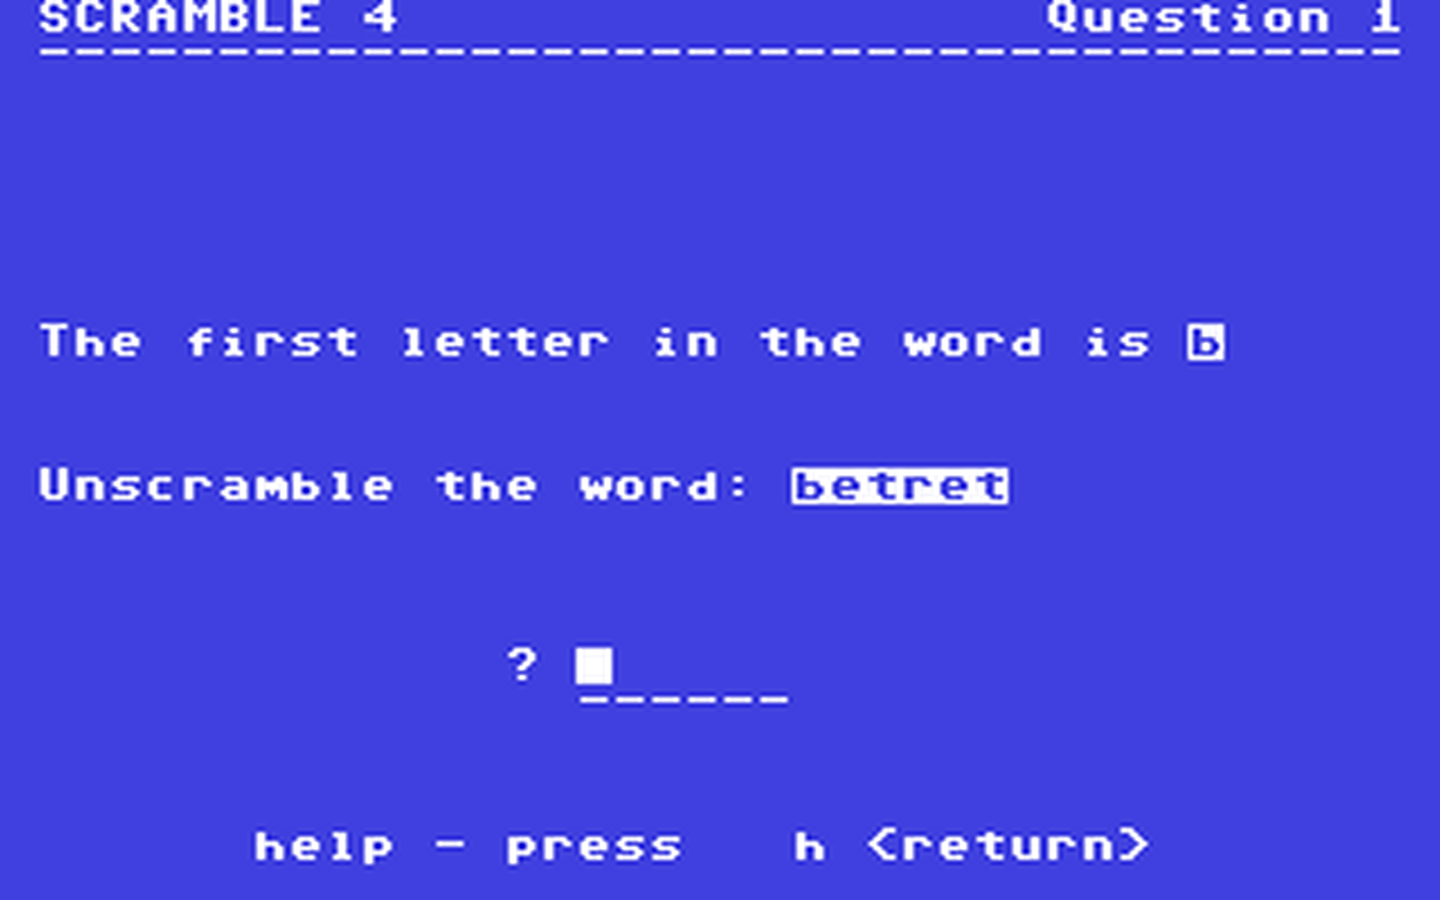 C64 GameBase Scramble_4 Commodore_Educational_Software